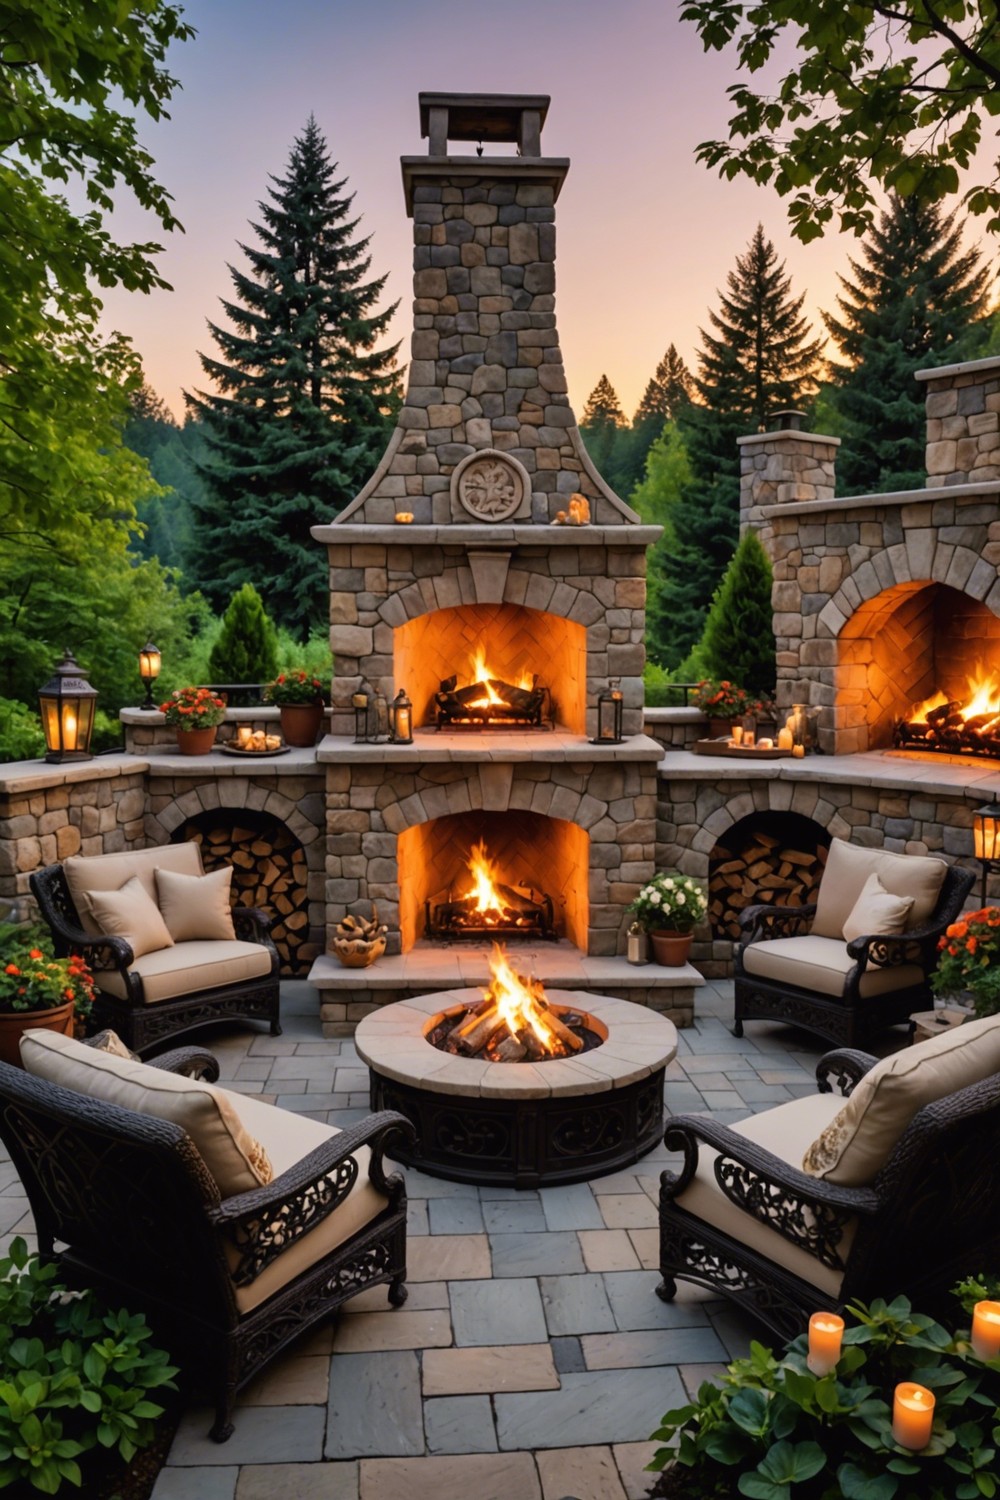 Grand Estate Fireplace: